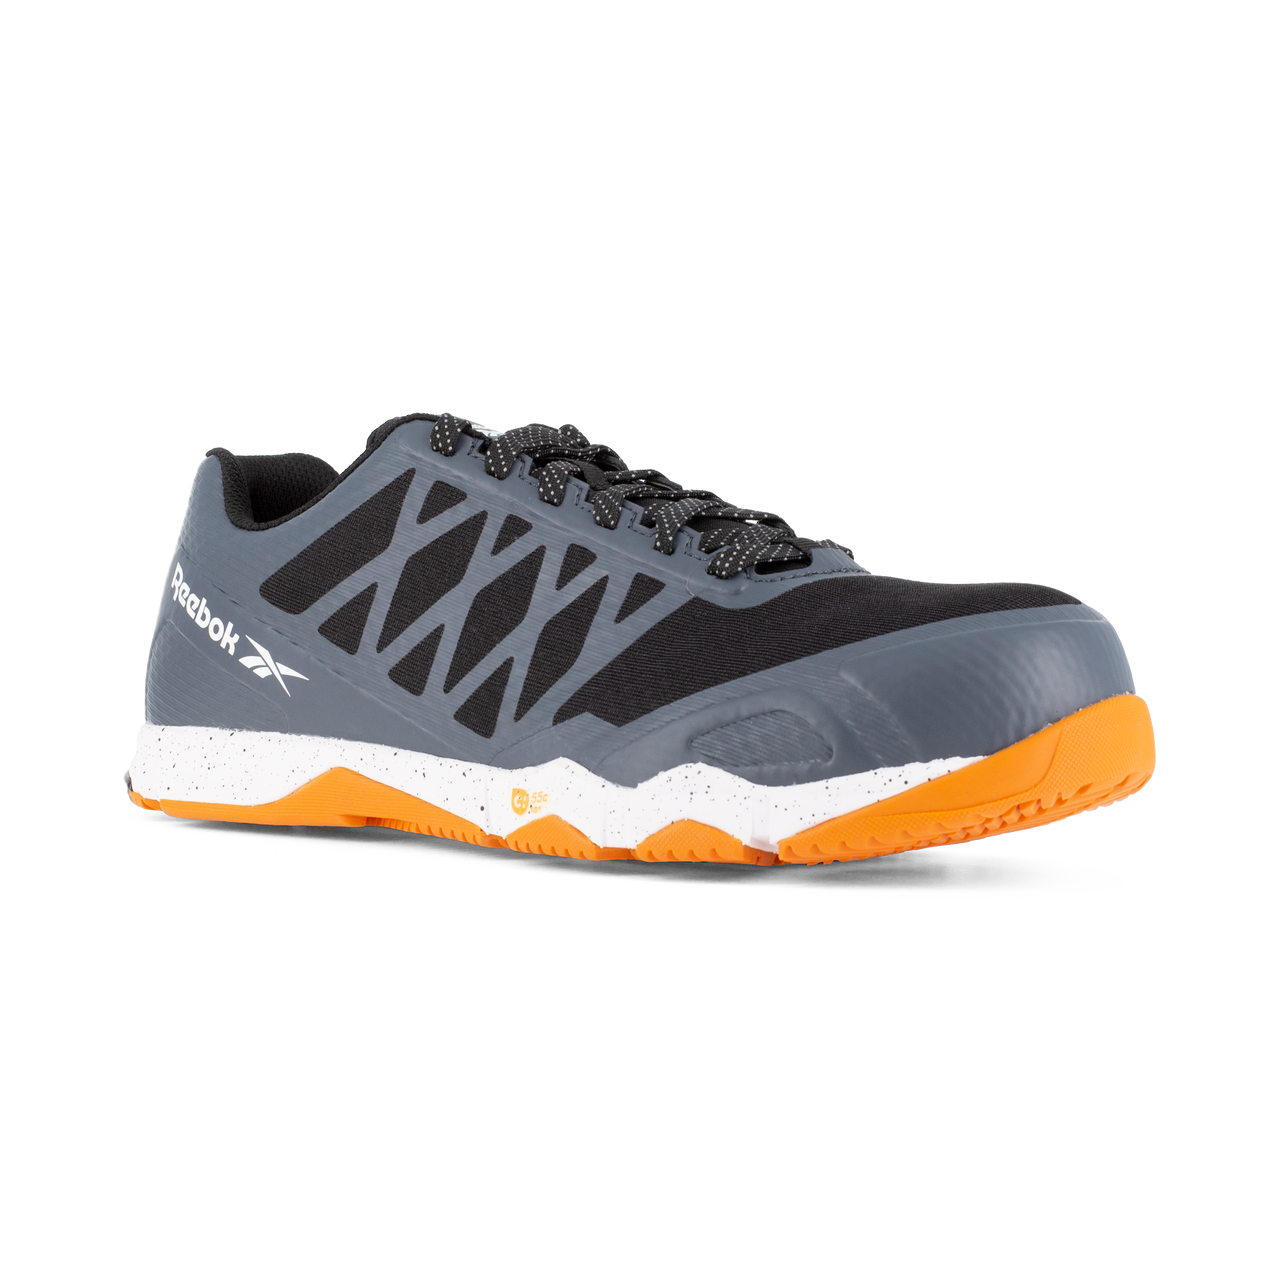 Rb4453 Reebok Mesh Composite Toe Sneaker (Grey and Orange)